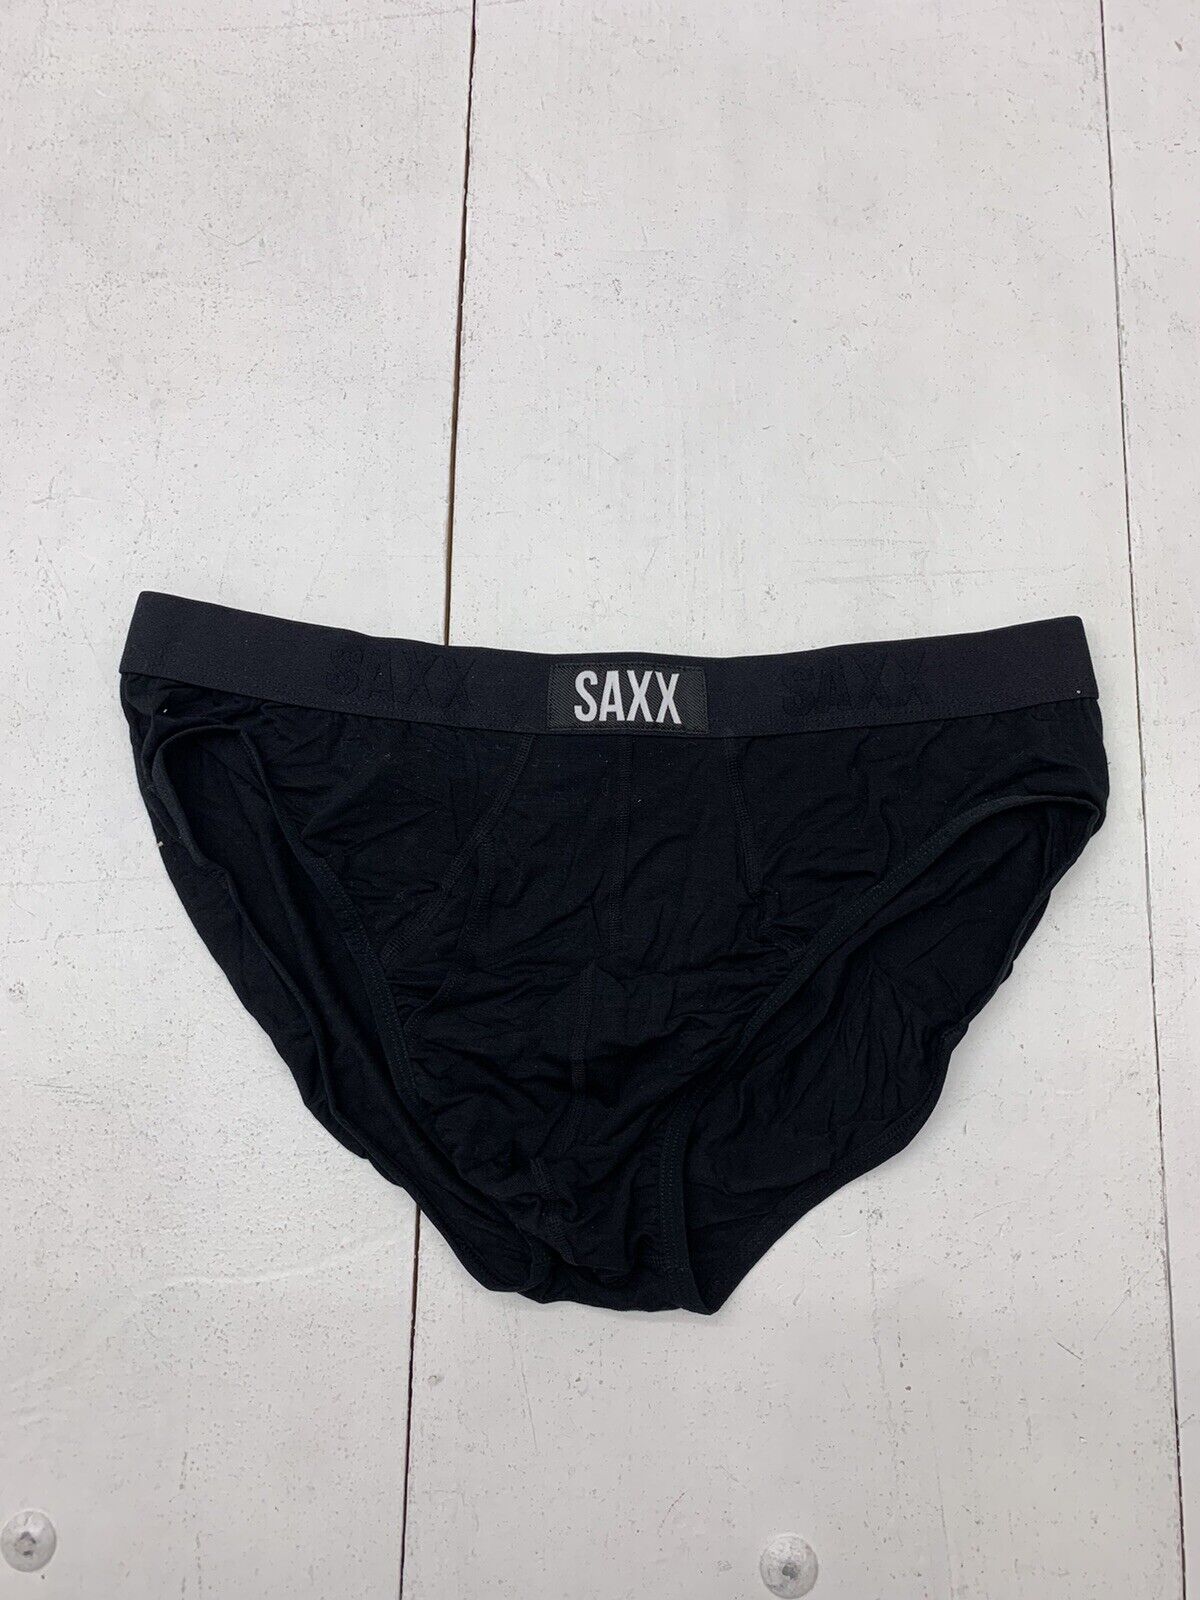 Saxx Mens Black Ultra Briefs Size XL